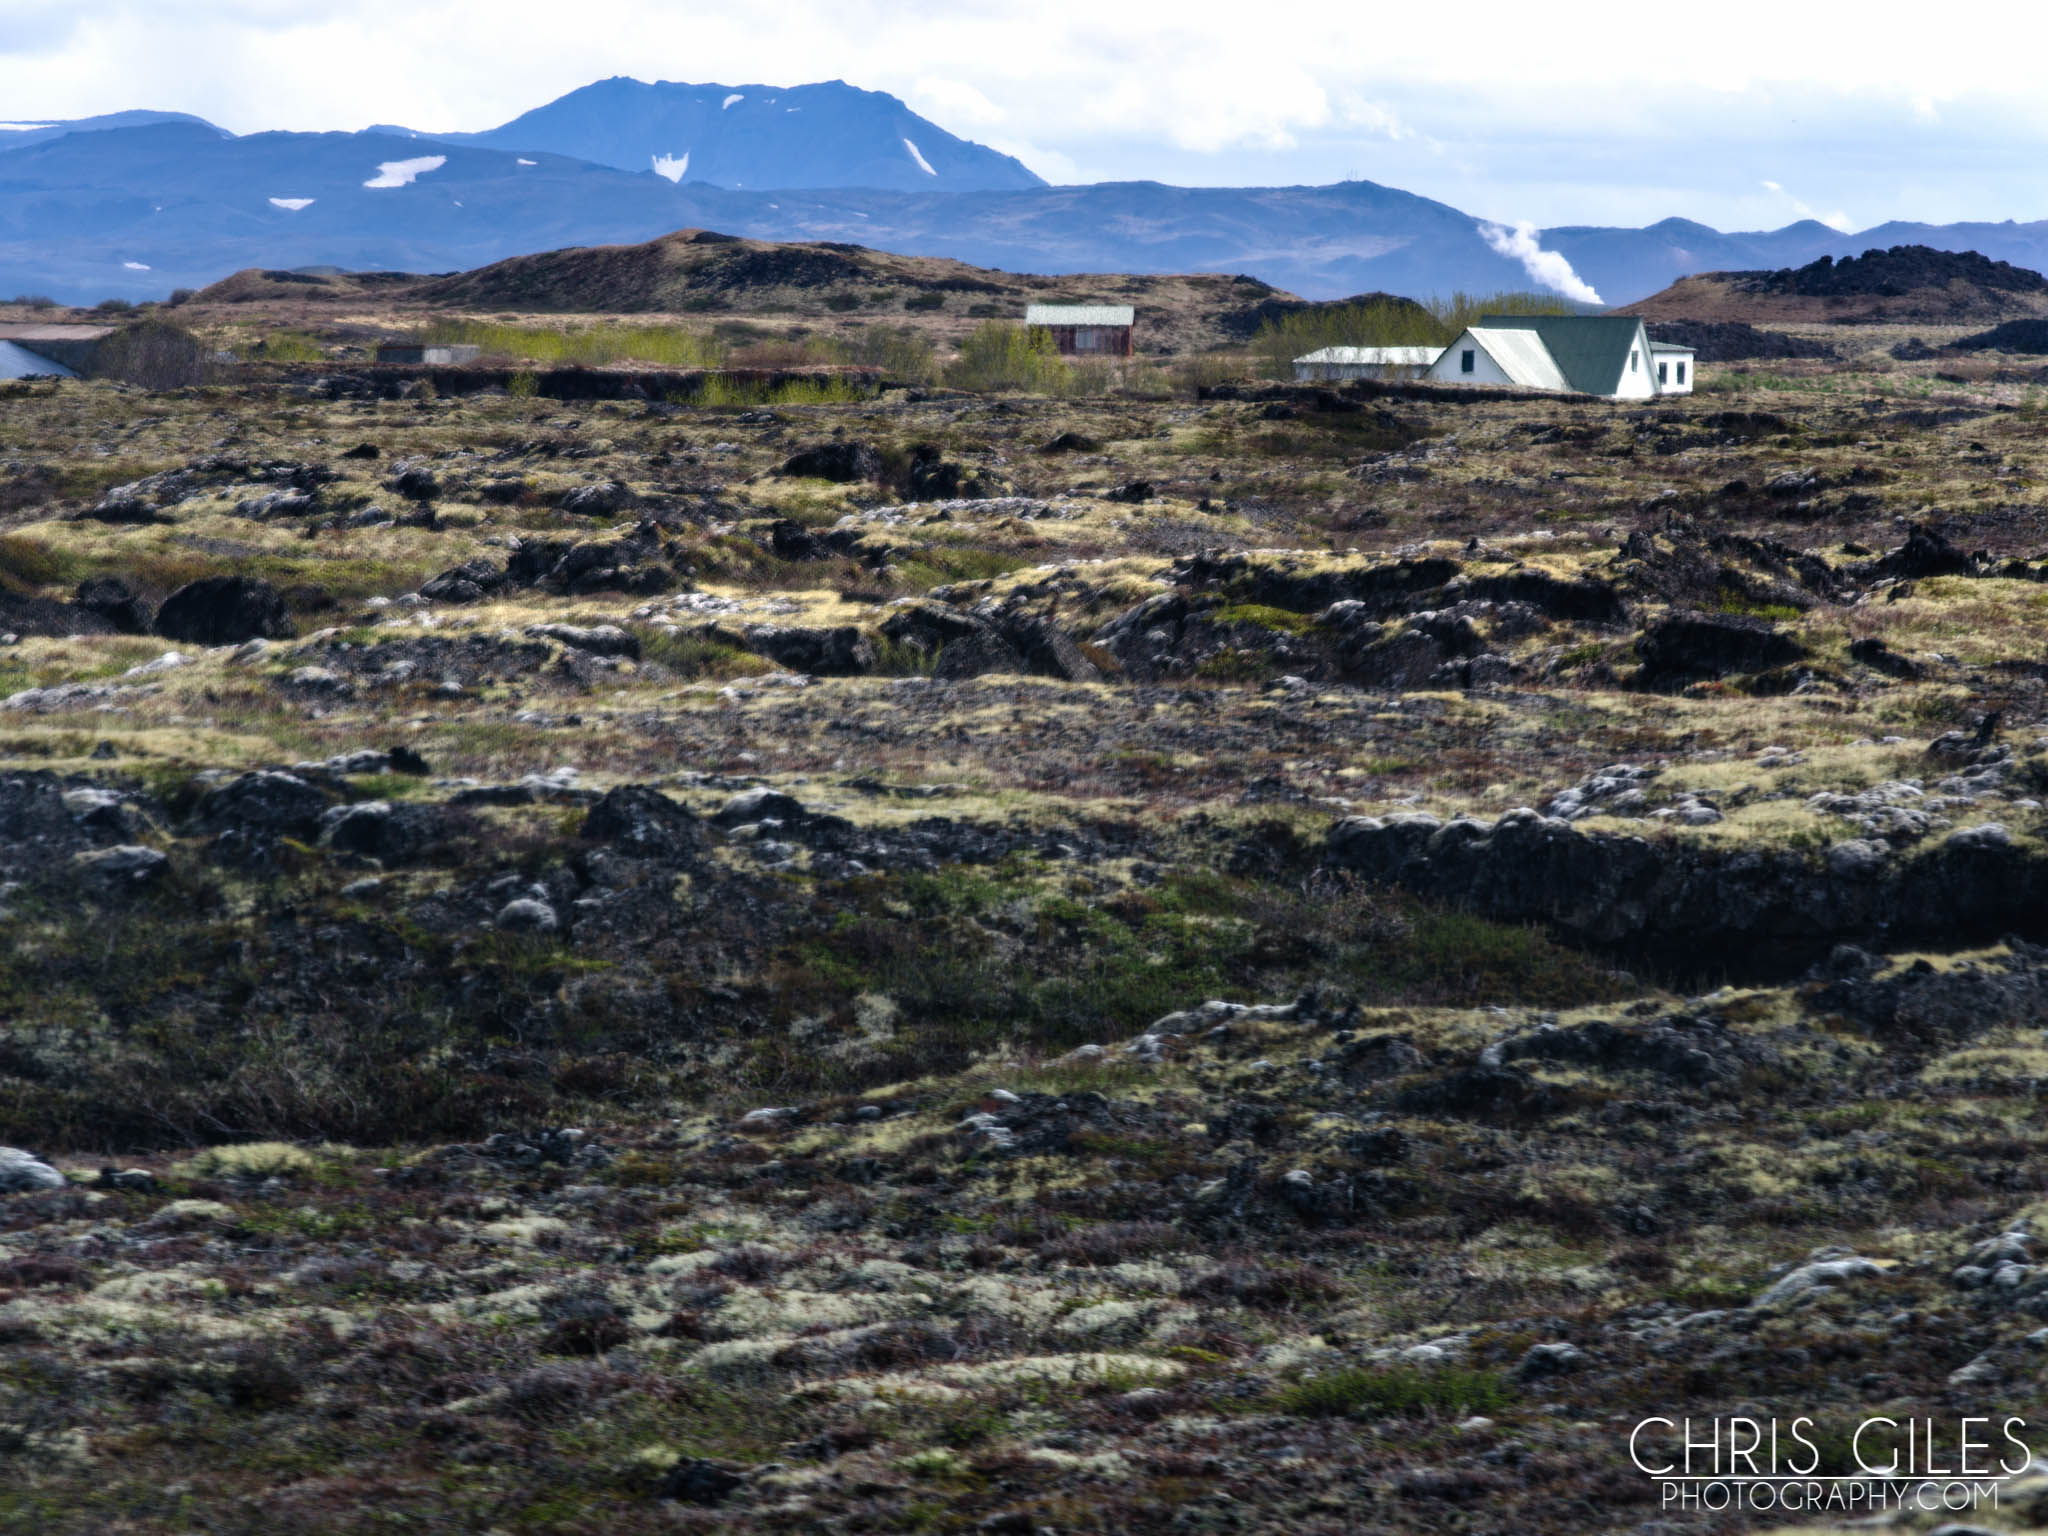 Icelandic home in a lava field